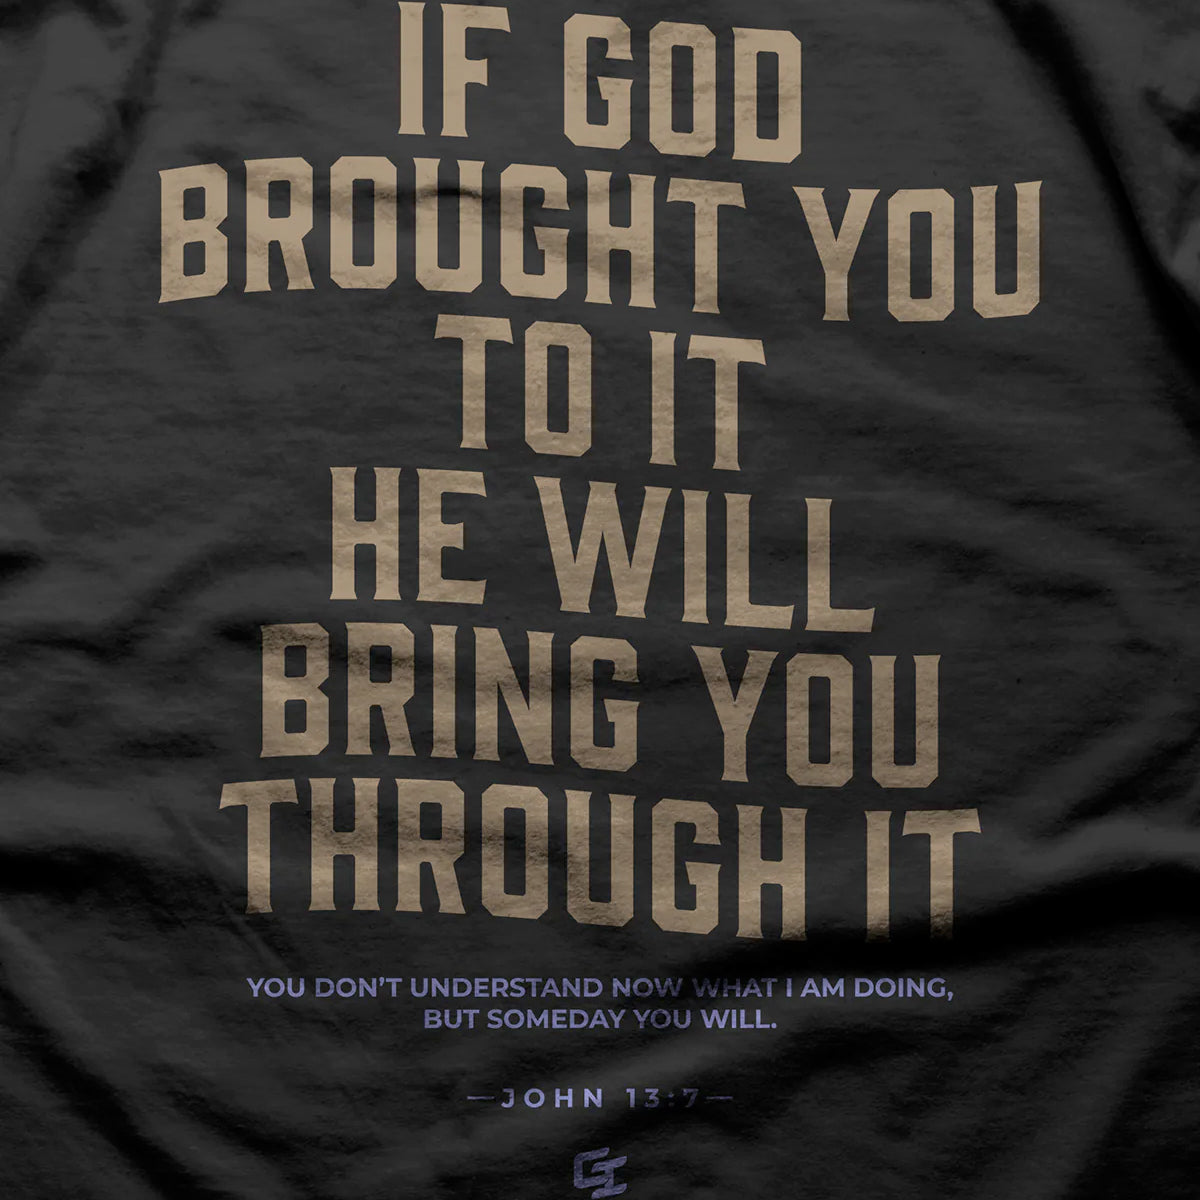 Epiphany 'He Will Bring You Through It' Lightweight T-Shirt